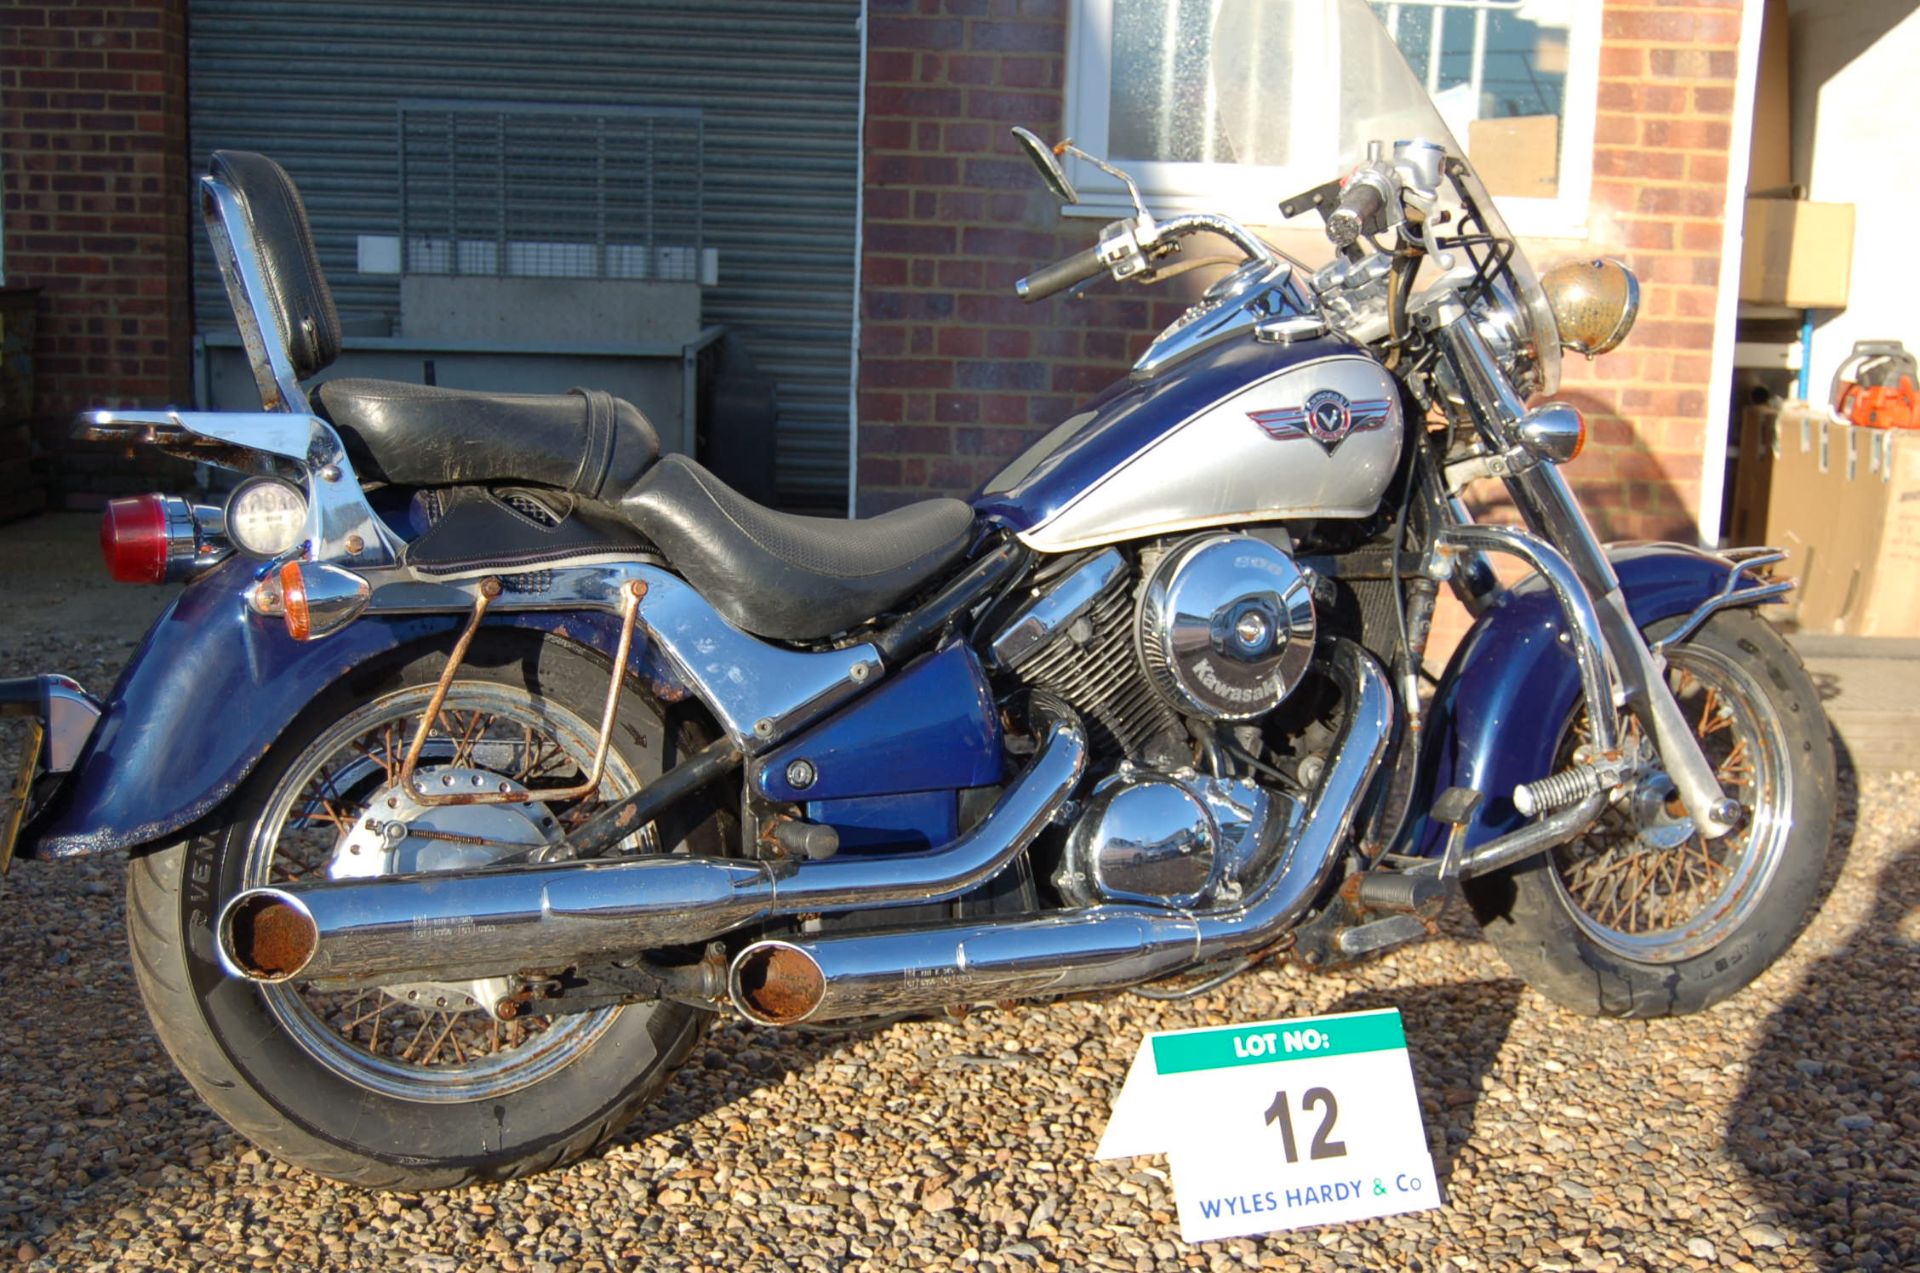 A 1997 KAWASAKI VN800 Classic 805cc V-Twin 8-Valve Cruiser Style Motorcycle, Registration No. P789 V